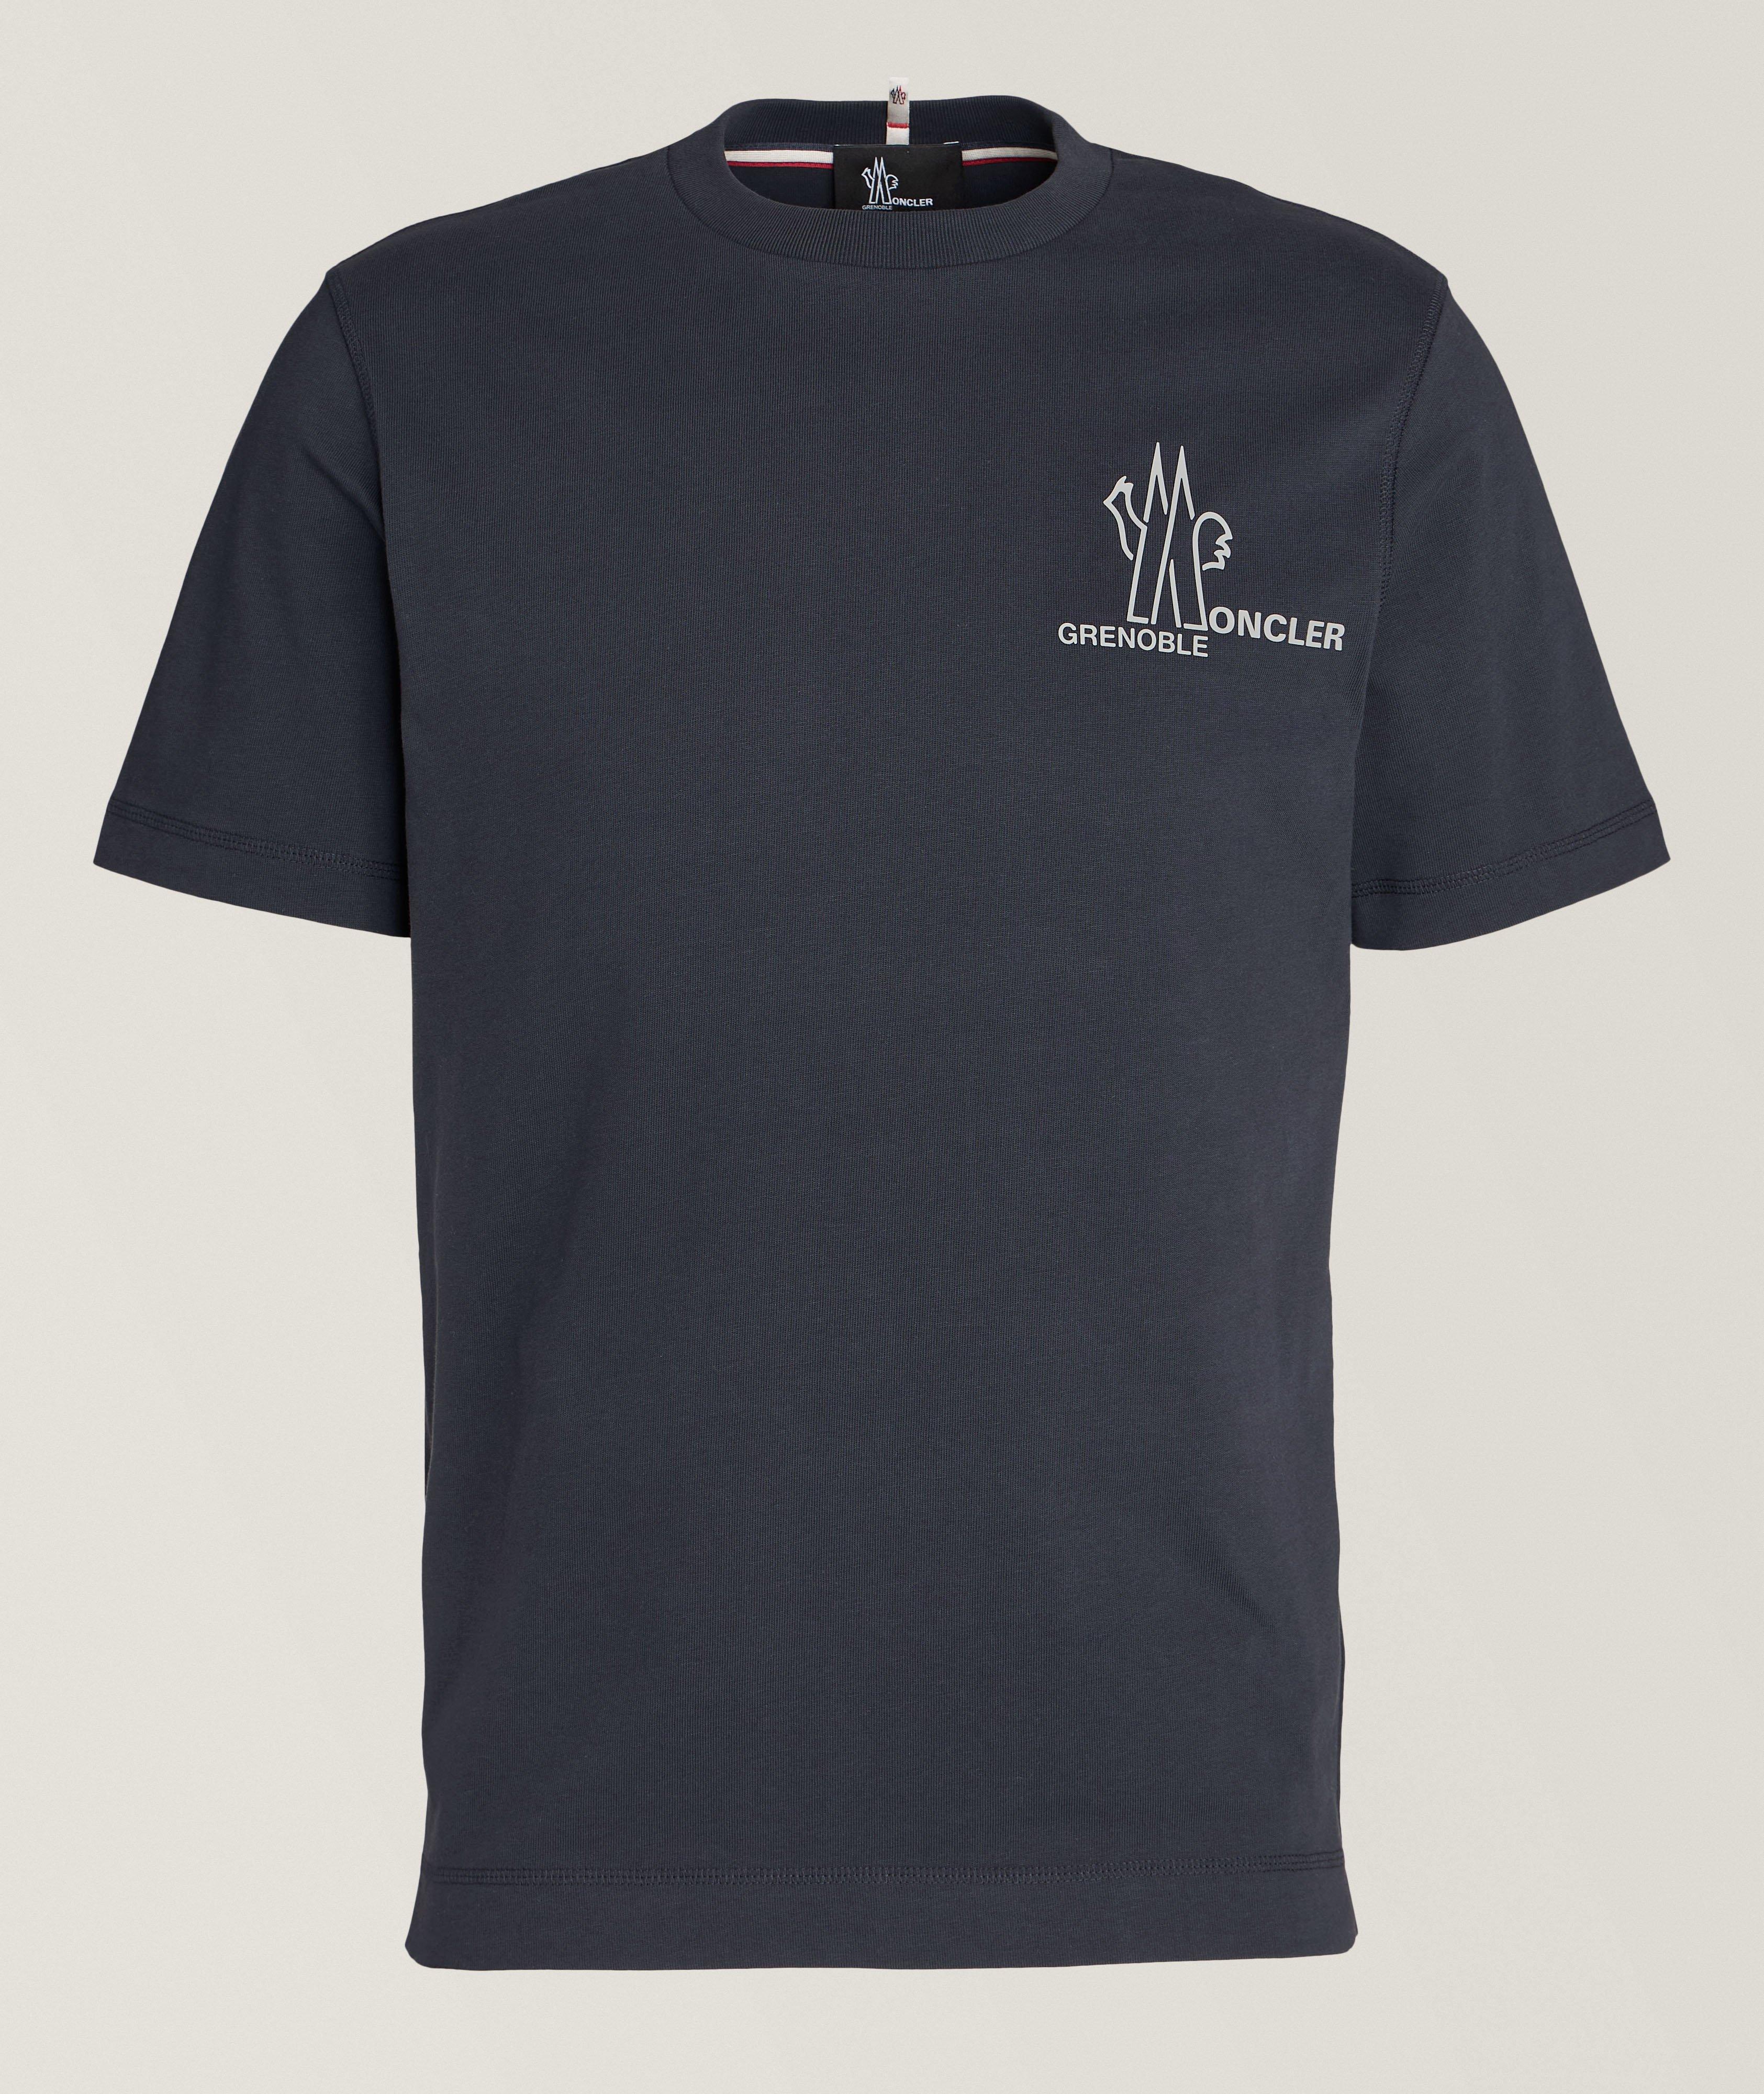 T-shirt en jersey de coton avec logo, collection Grenoble image 0